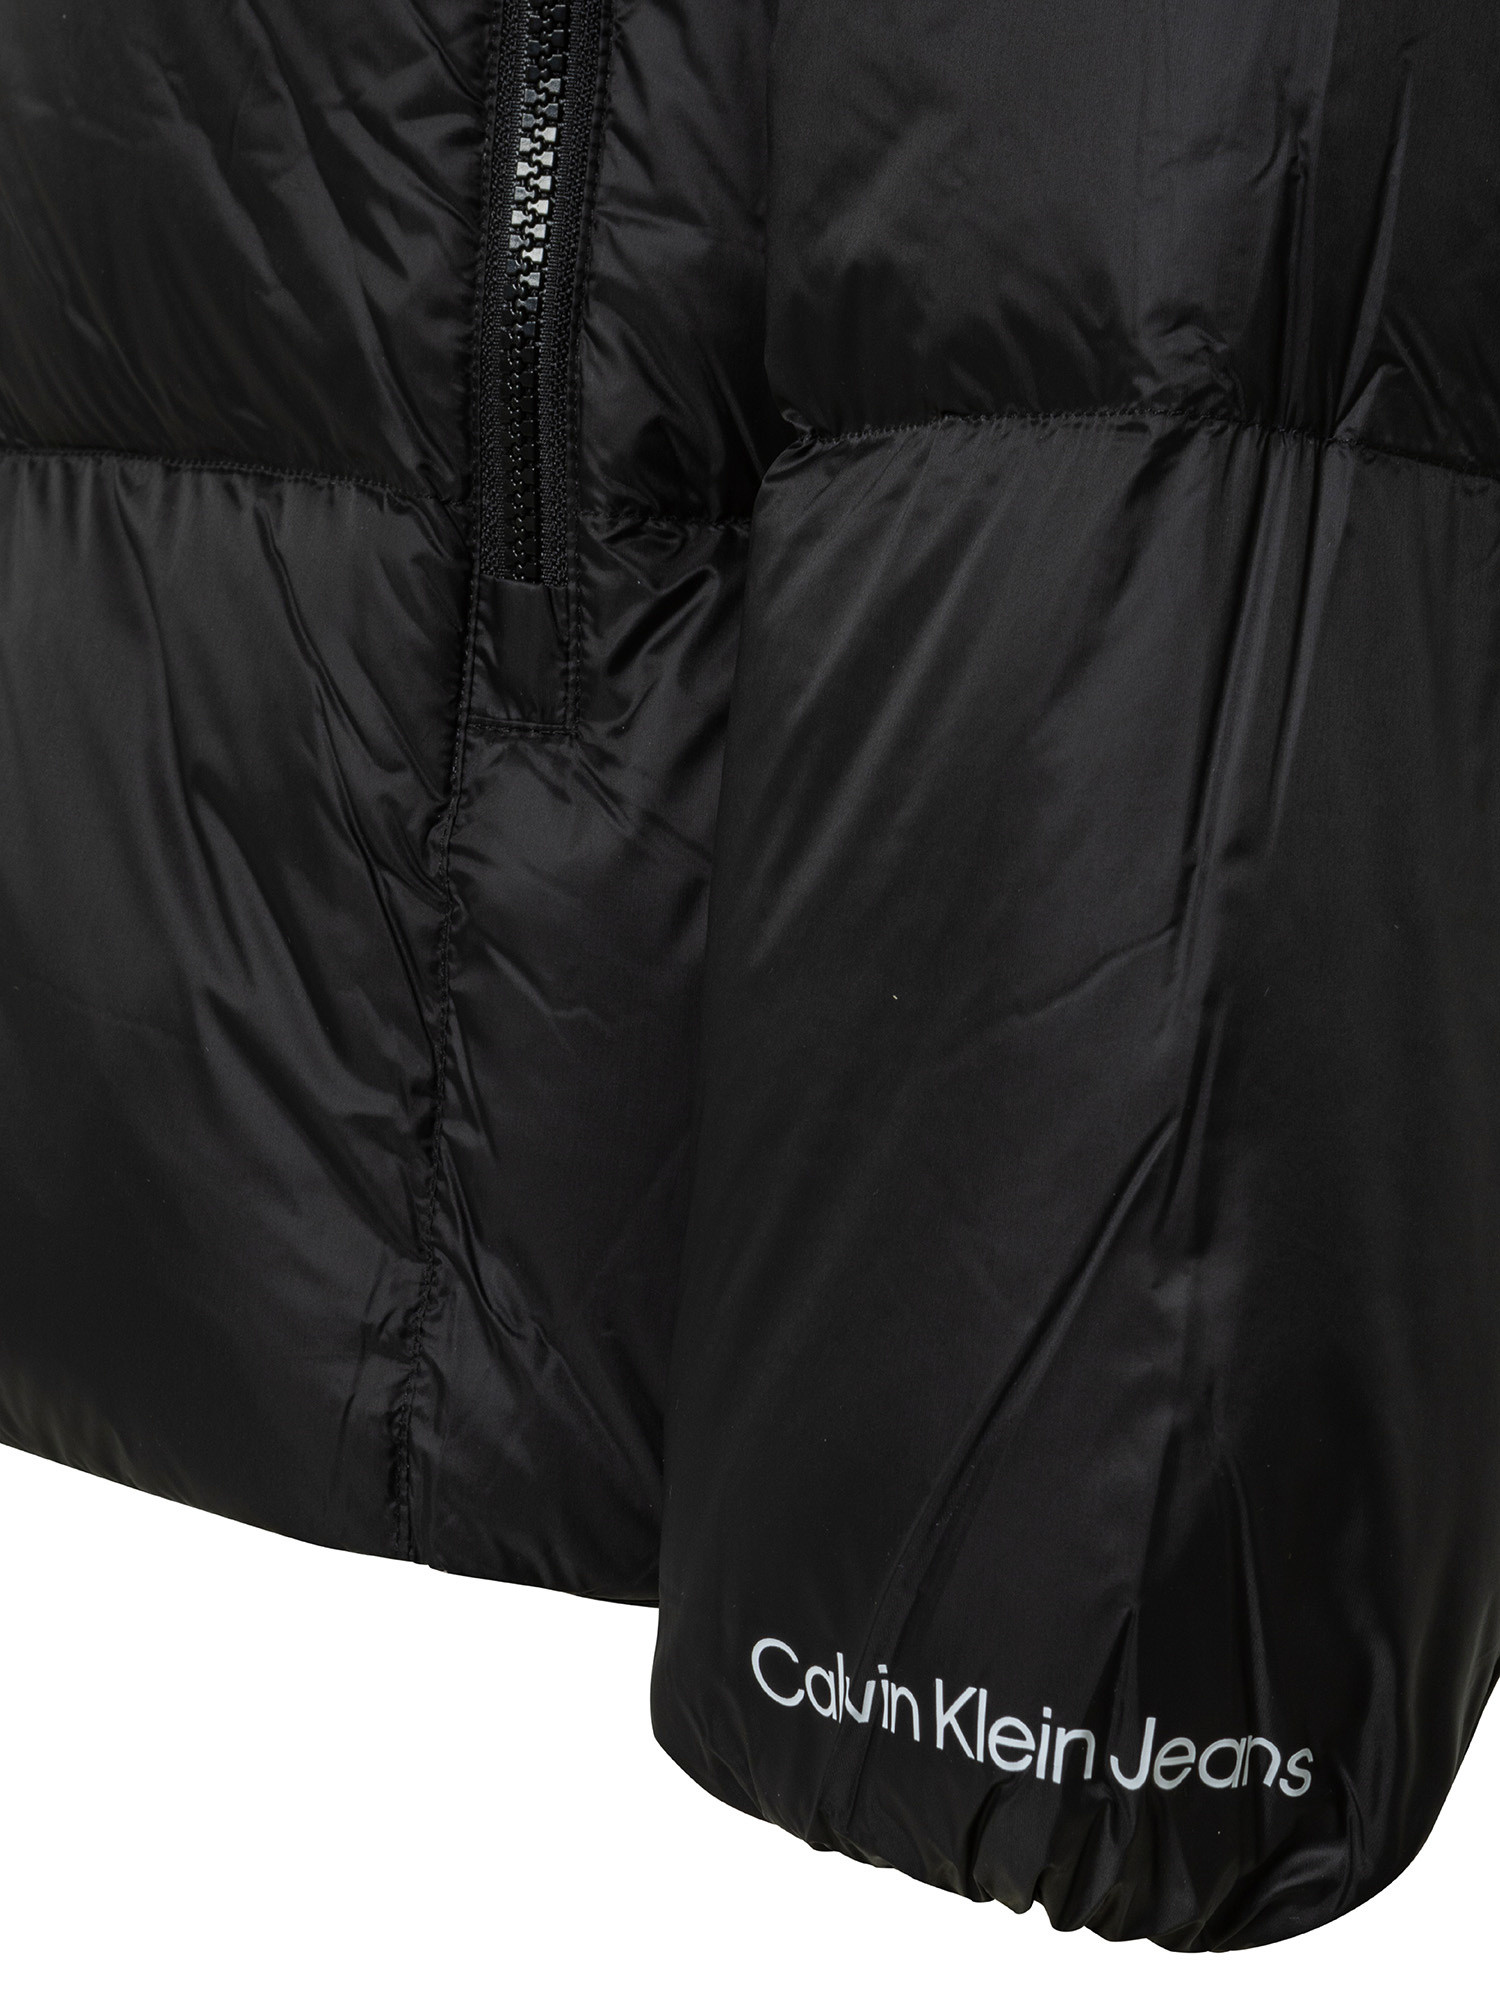 Calvin Klein Jeans - Piumino con logo, Nero, large image number 2